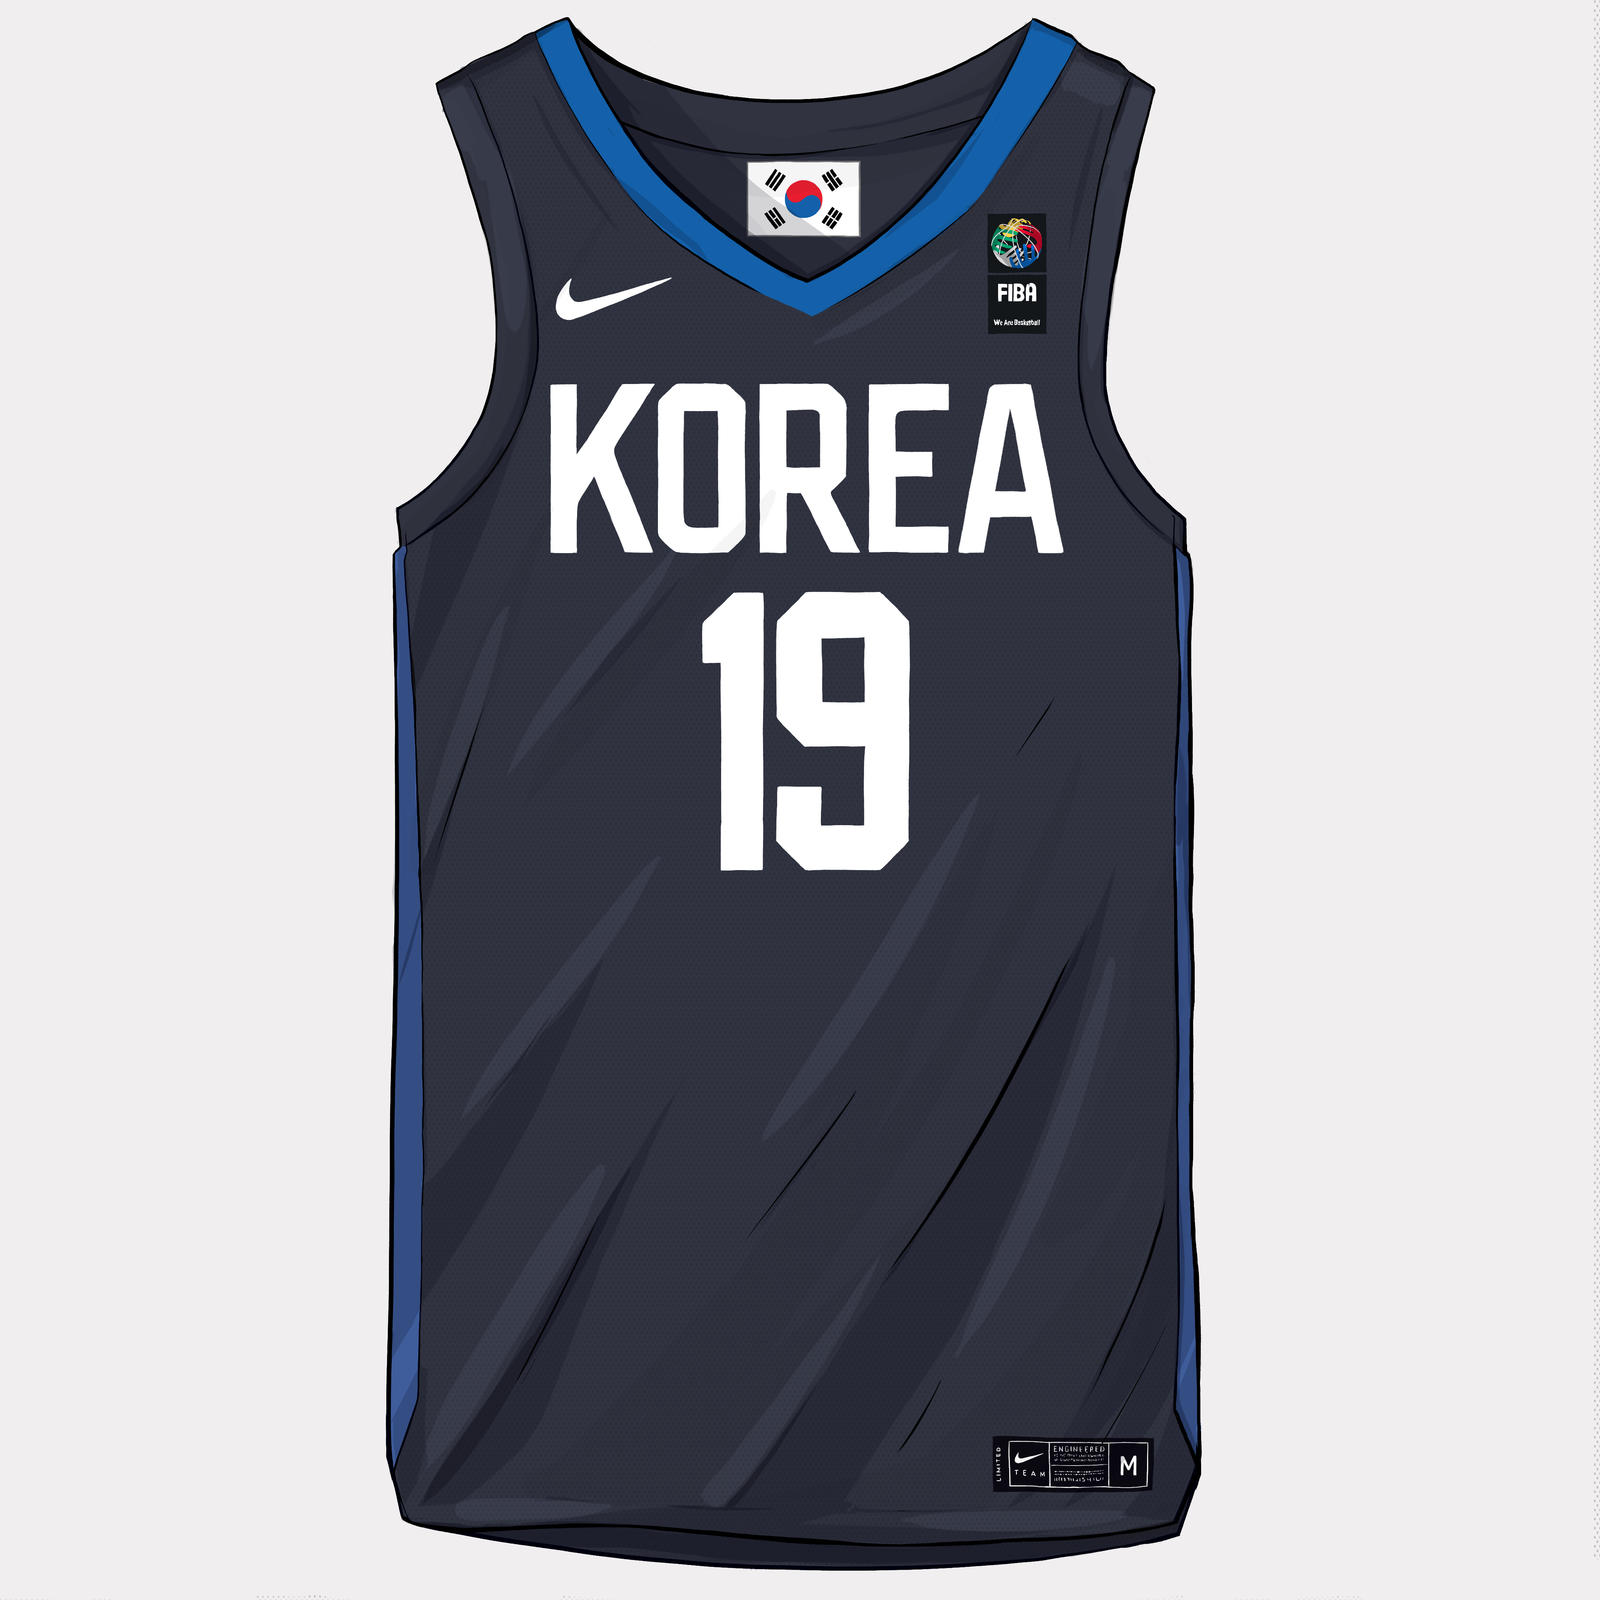 nike-news-korea-national-team-kit-2019-illustration-1x1_1_square_1600.jpg